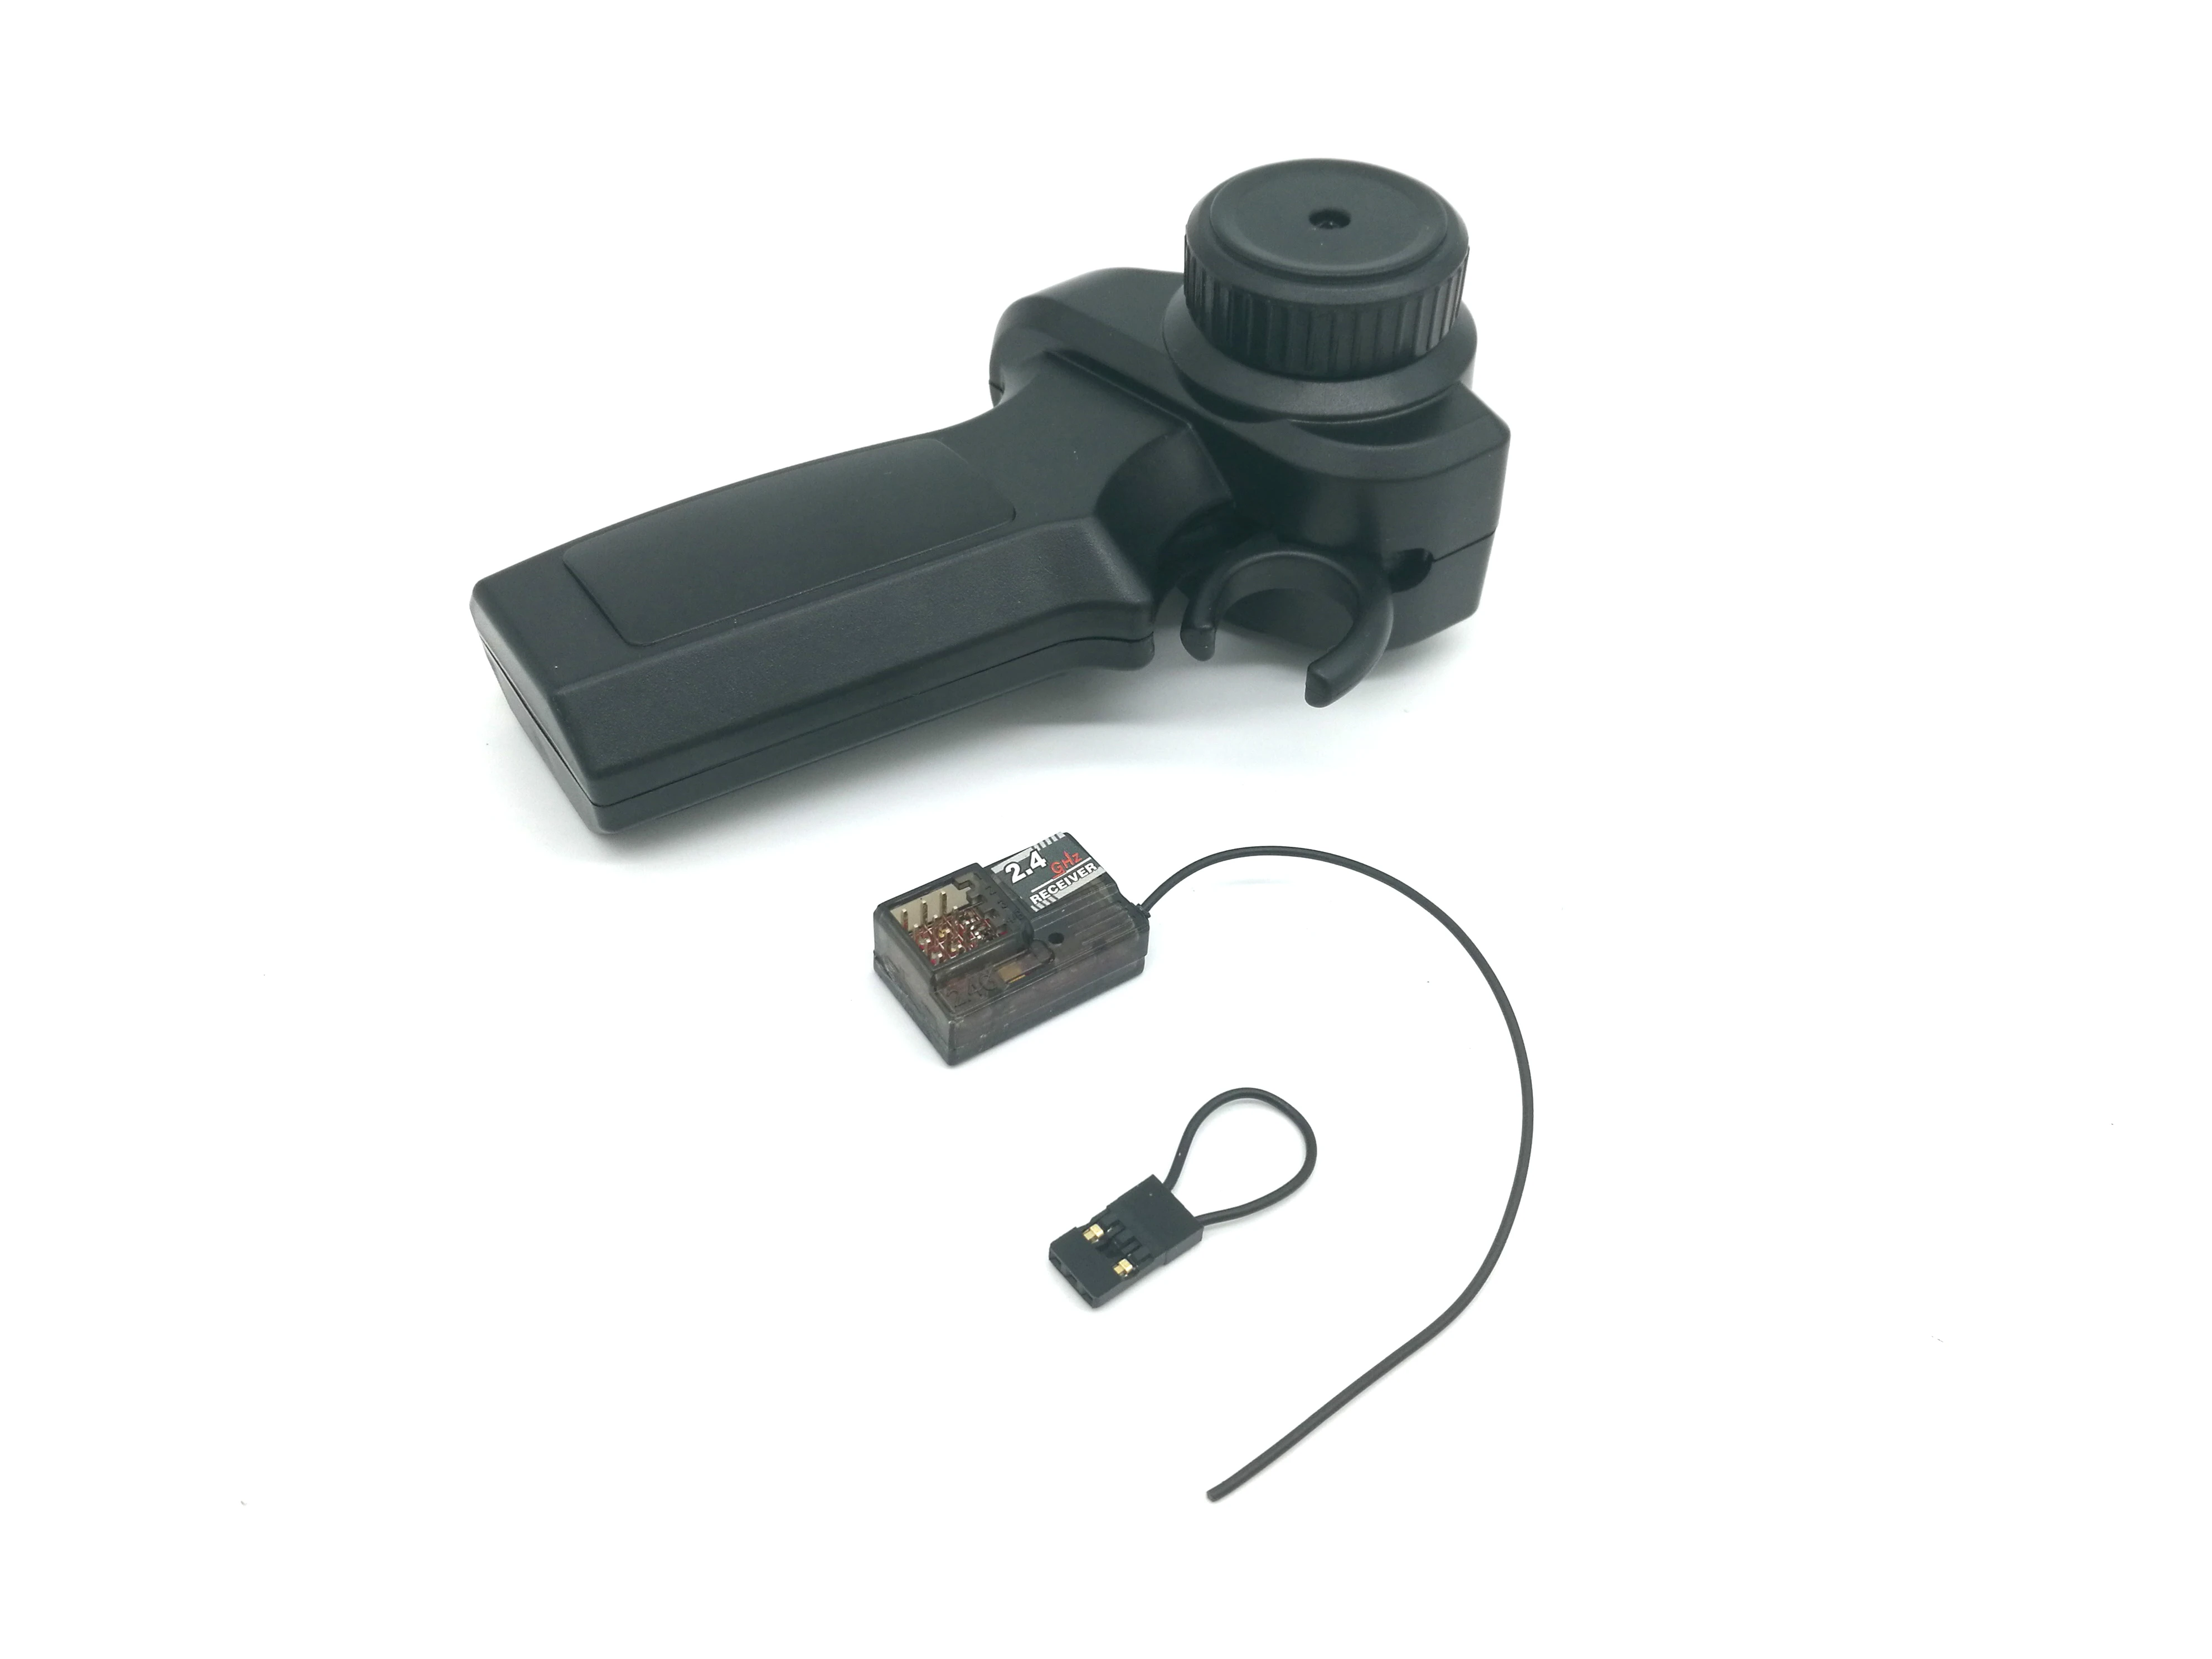 2.4Ghz Mini Remote W1 Controller Receiver for Electric Skateboard / Longboard / ESK8 Remote Controller-Black